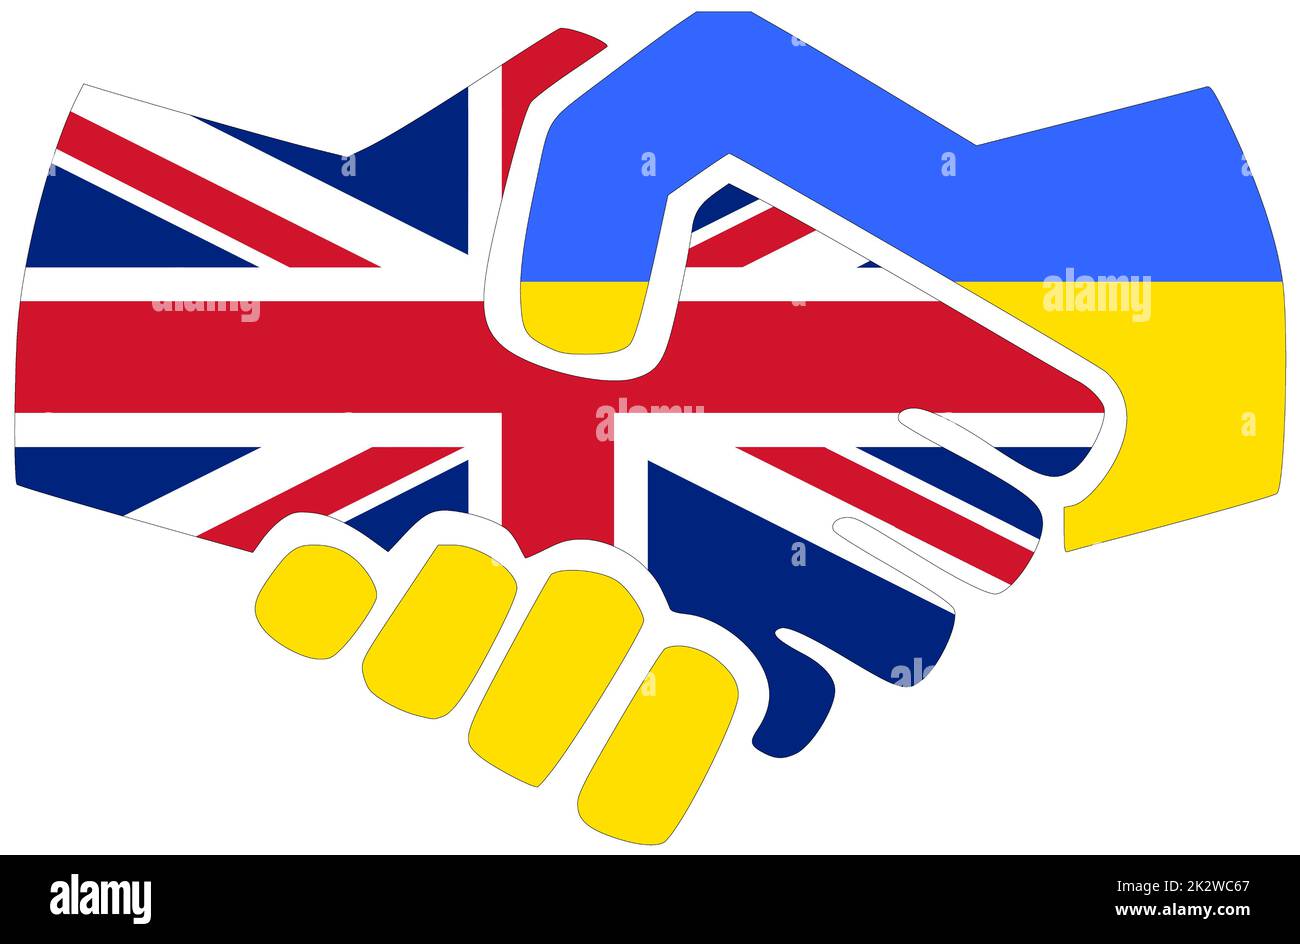 UK - Ukraine : Handshake, symbol of agreement or friendship Stock Photo